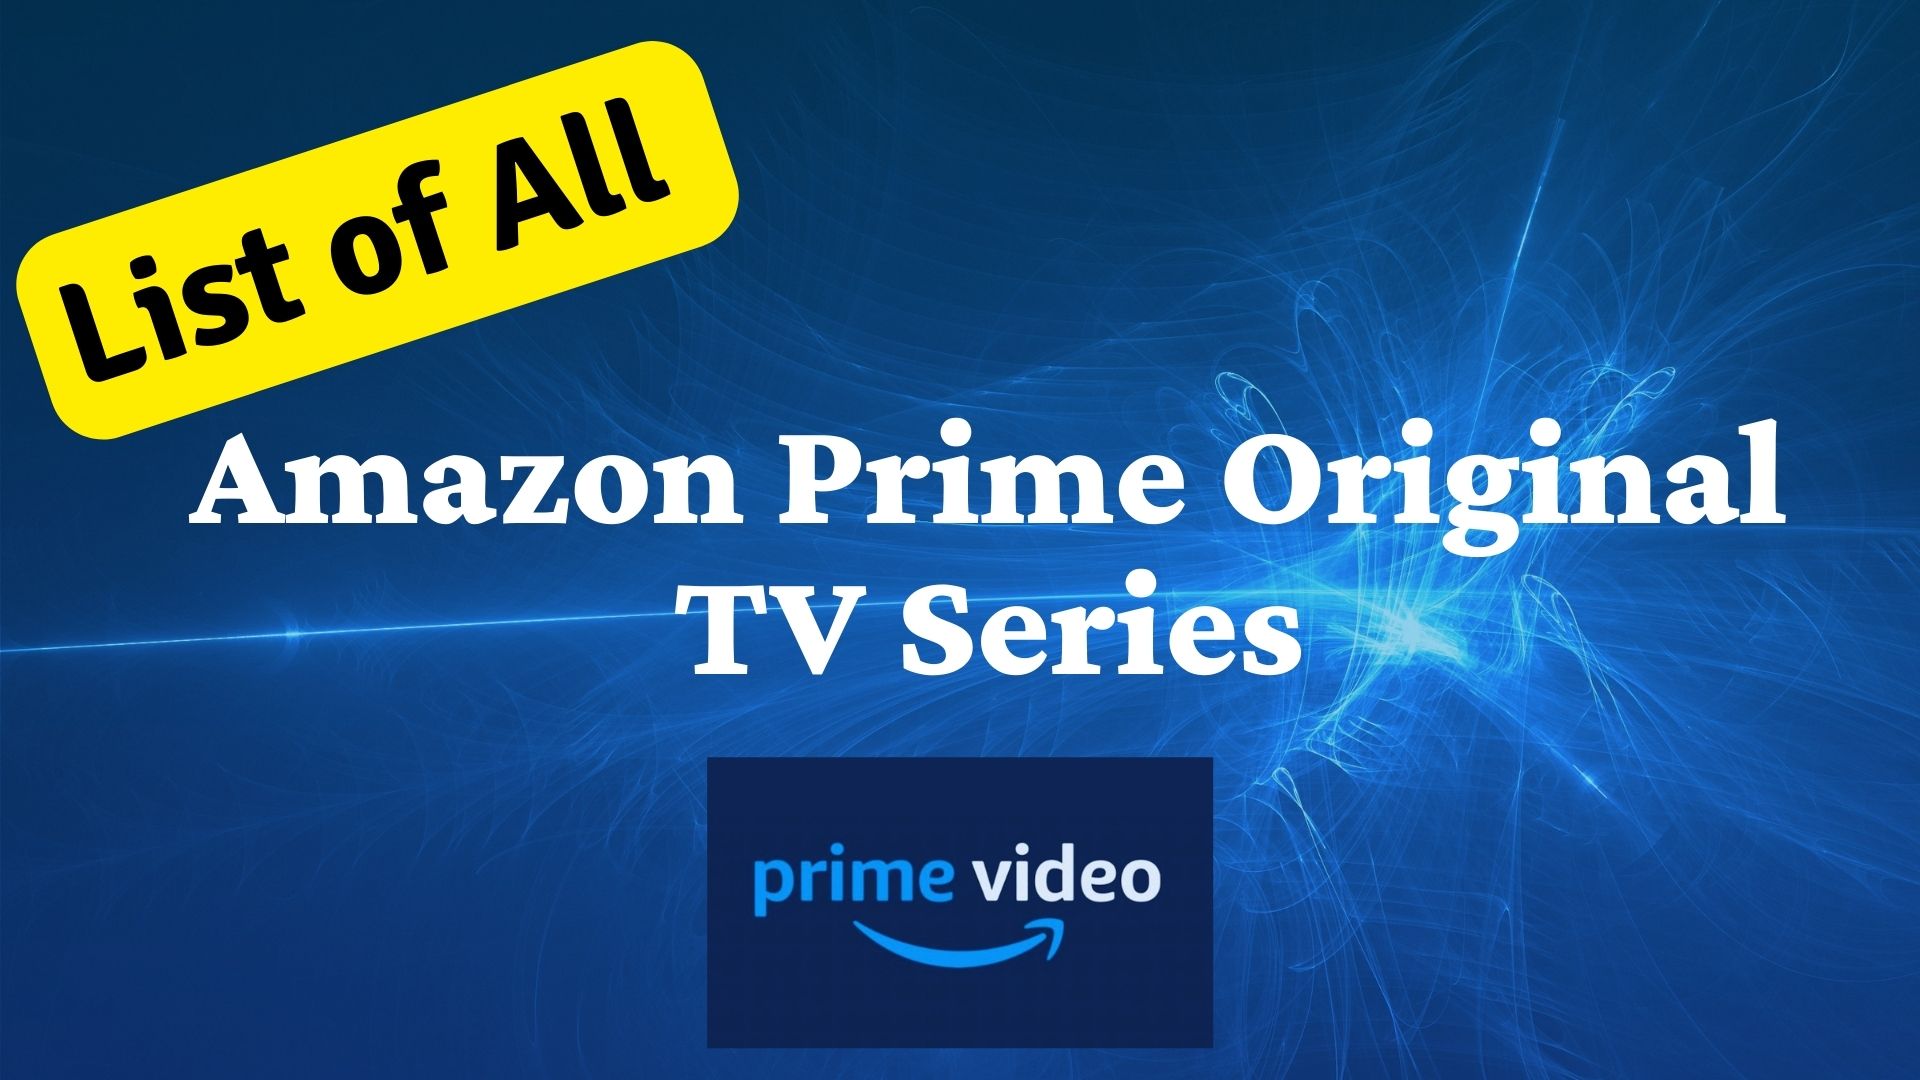 List of All Amazon Prime Original TV Series